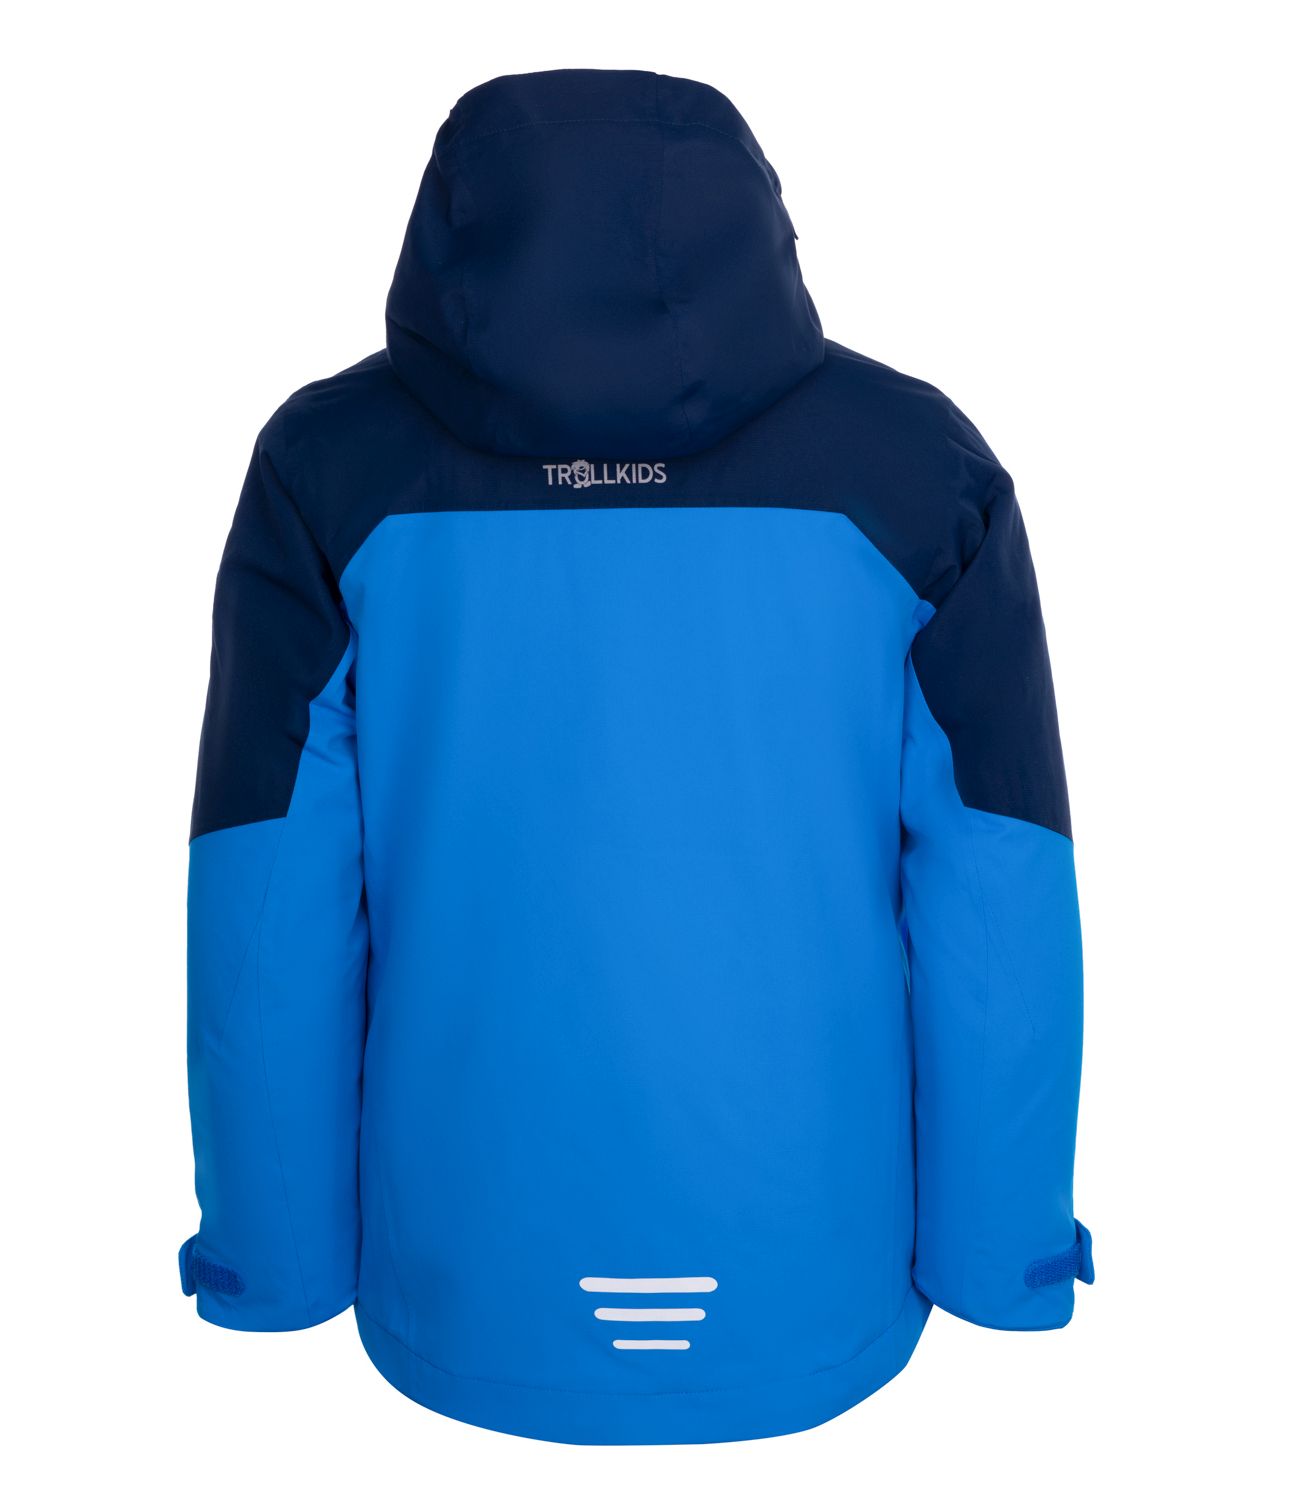 Trollkids "Kids Skanden 3in1 Jacket" - nevy/medium blue